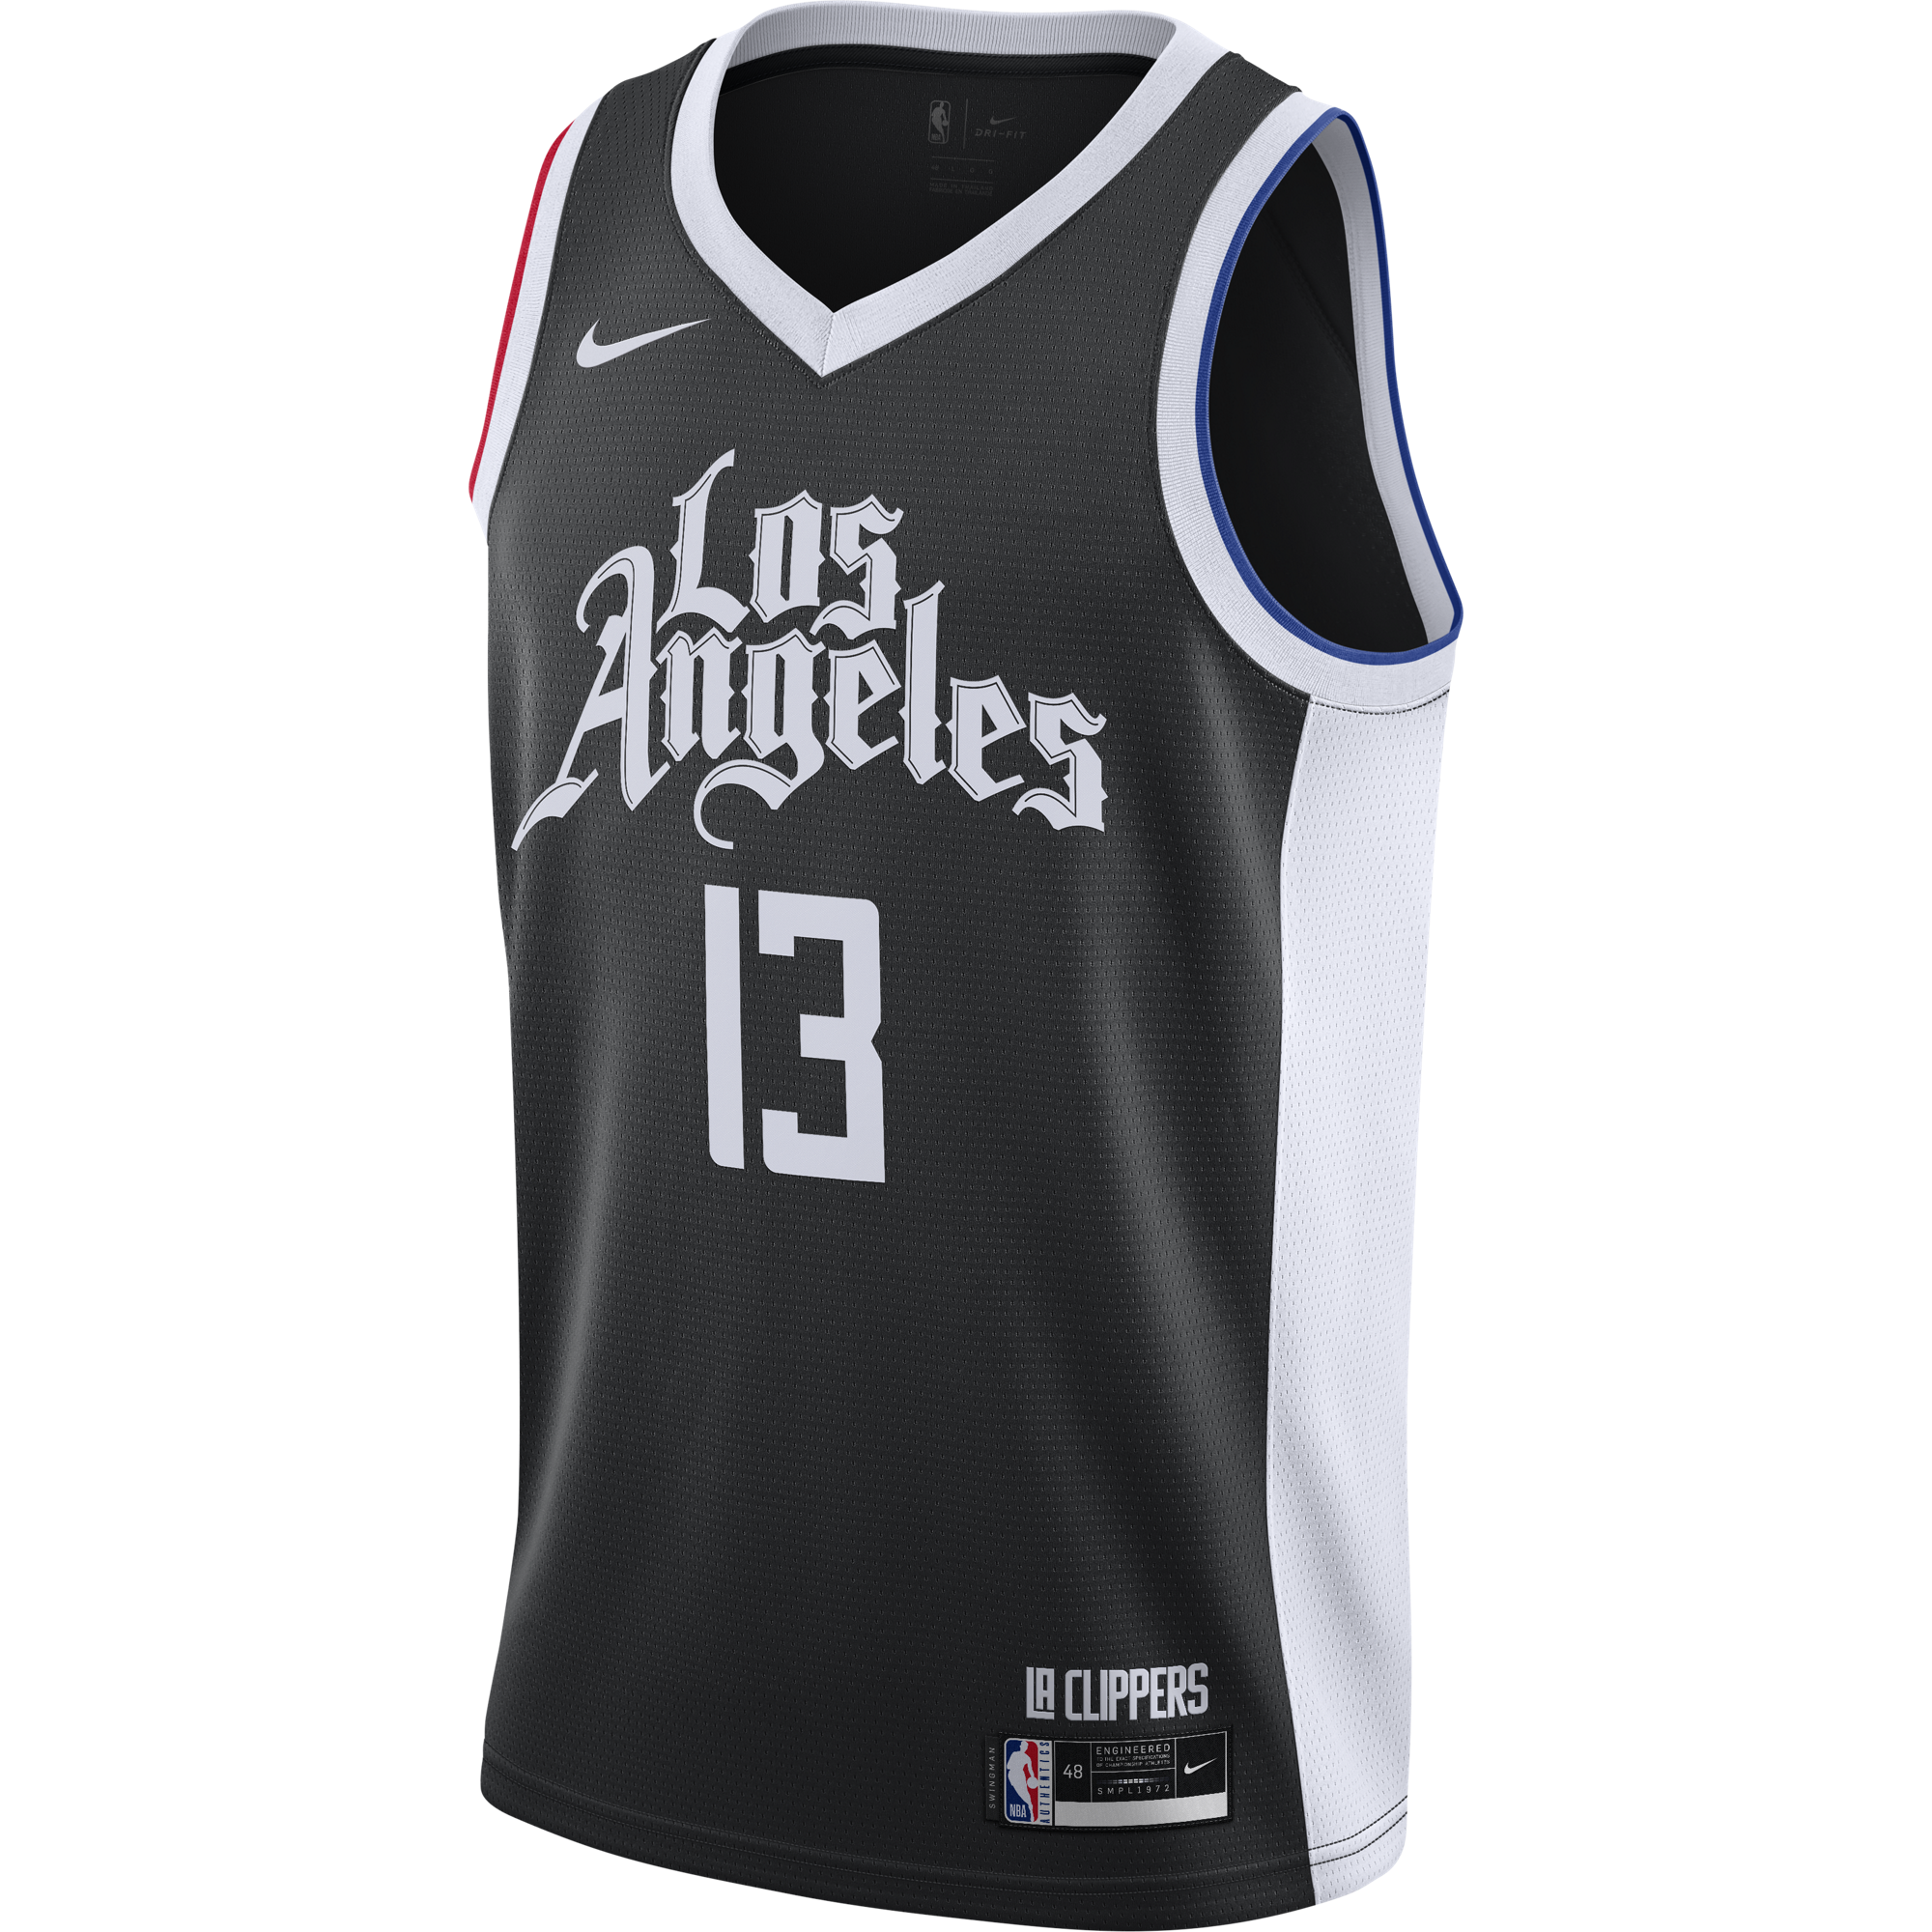 NIKE NBA LOS ANGELES CLIPPERS PAUL GEORGE CITY EDITION SWINGMAN JERSEY BLACK